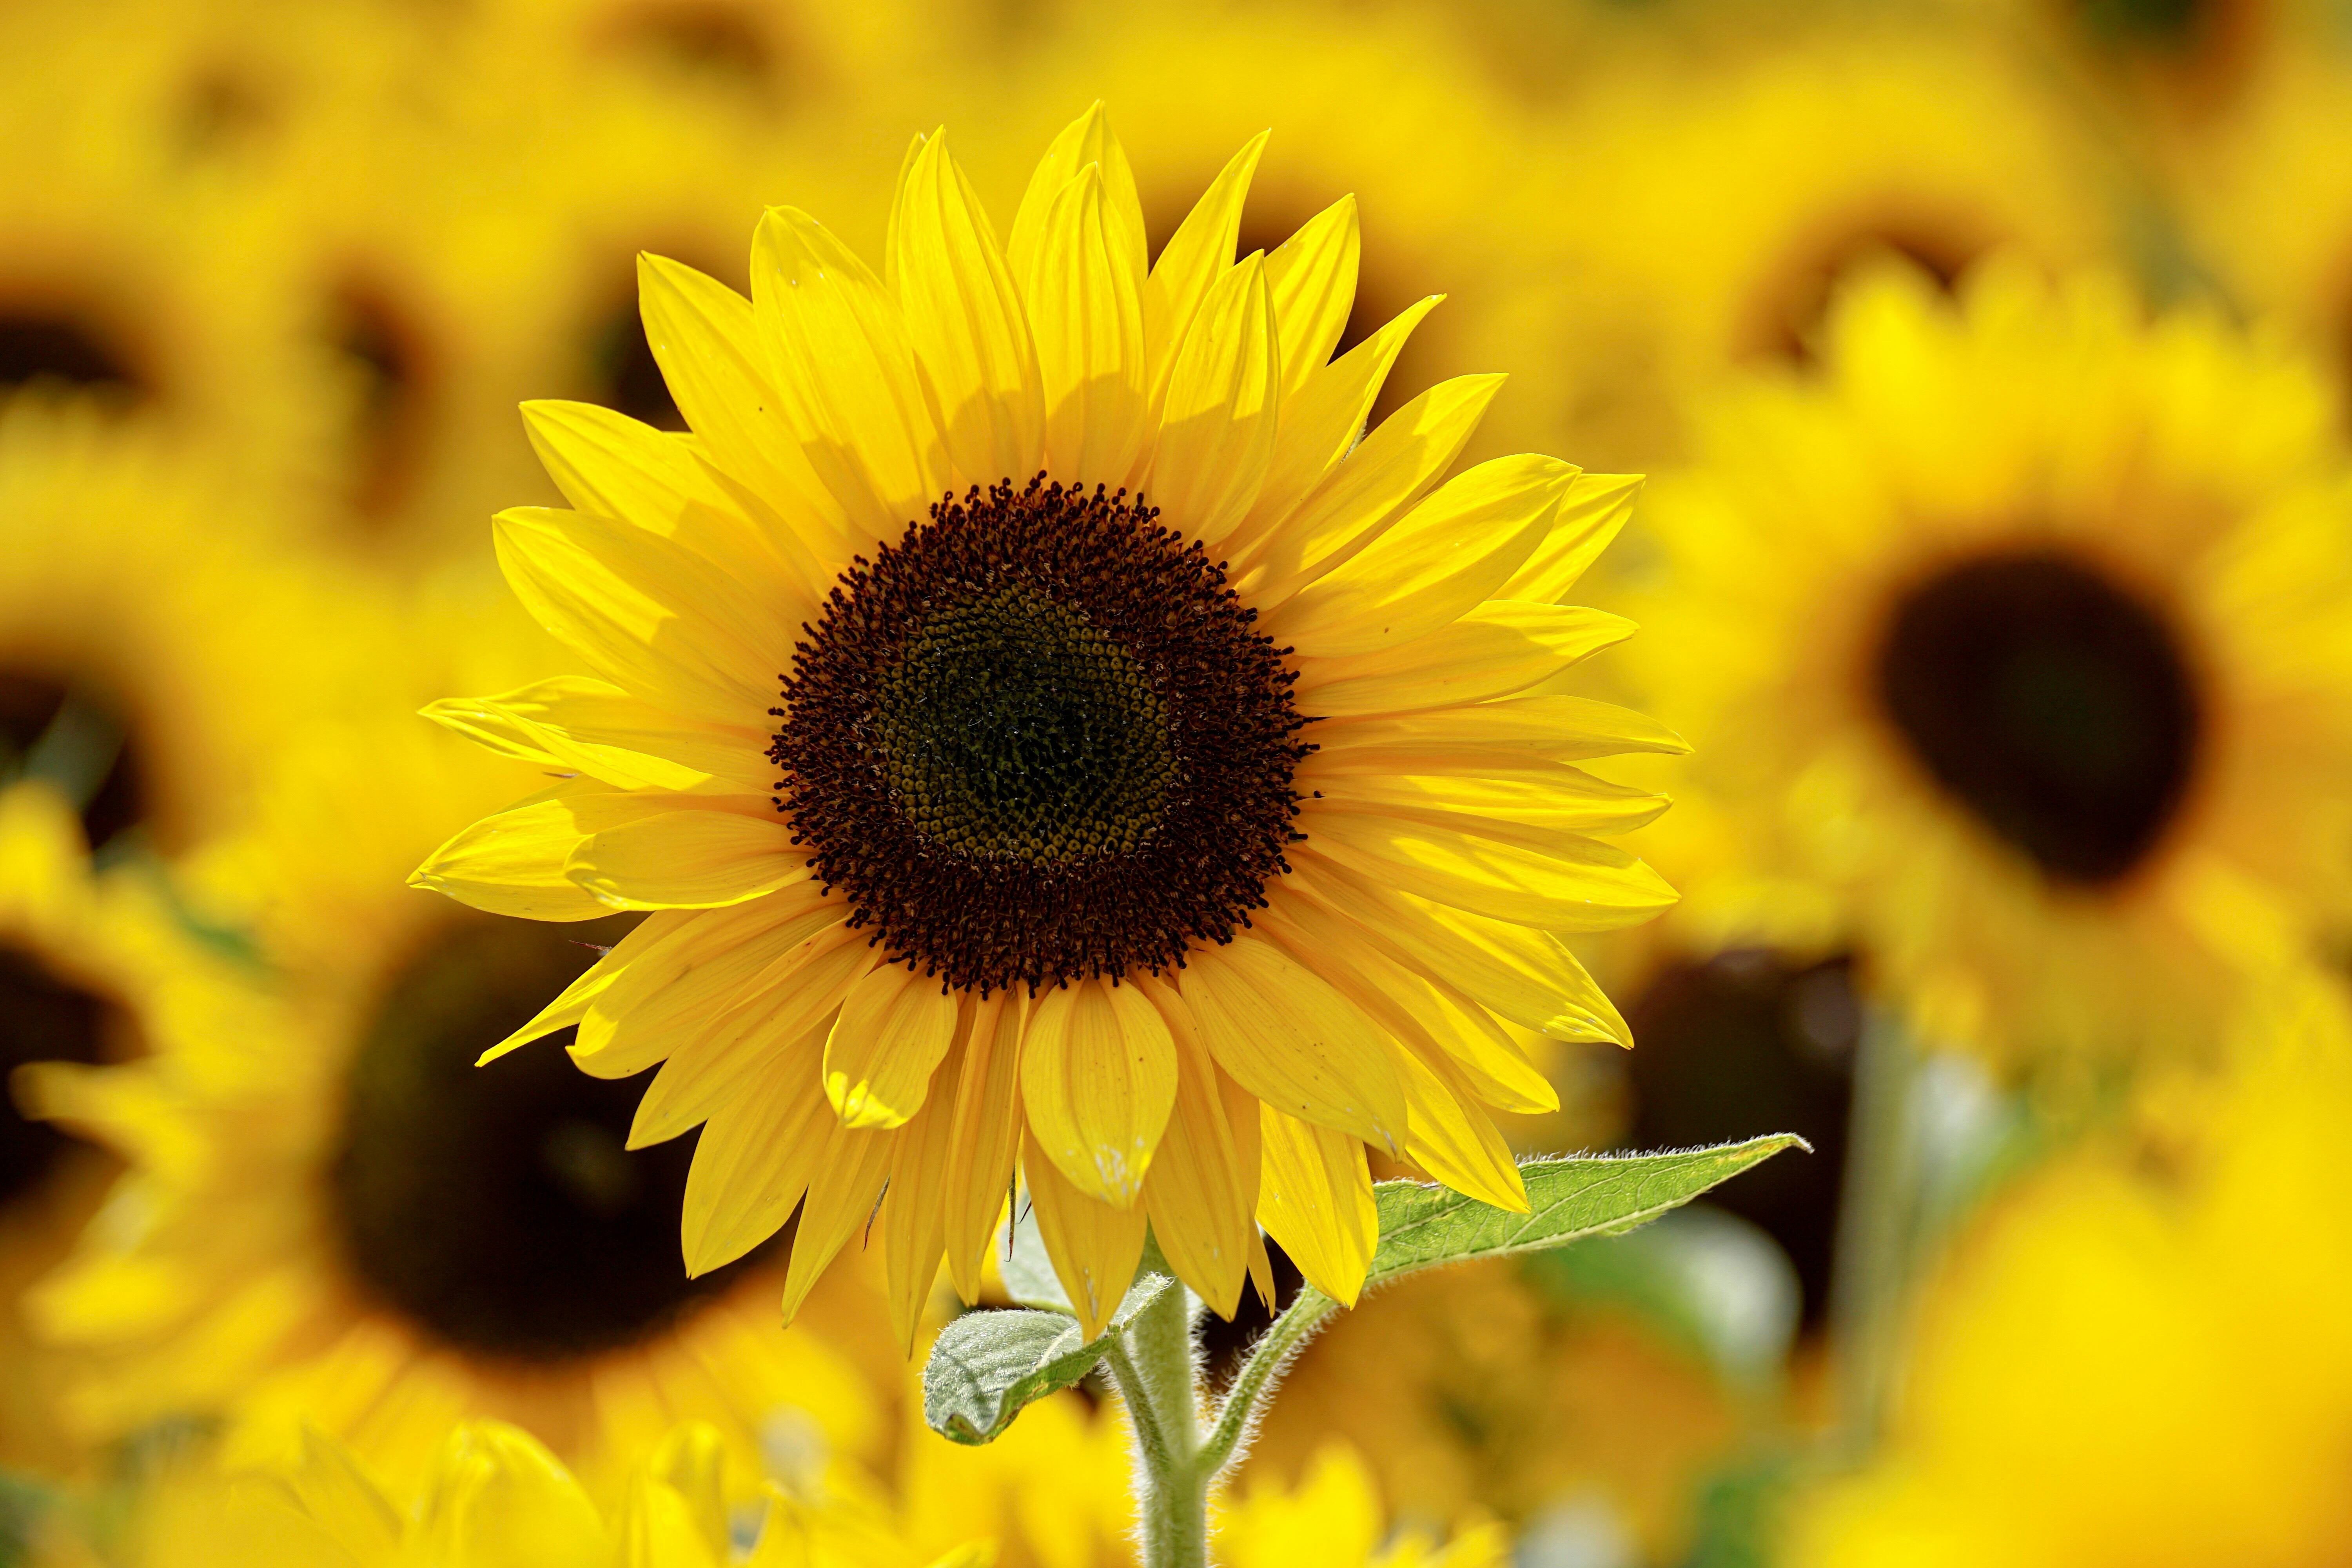 Sunflower Wallpaper Photos, Download The BEST Free Sunflower Wallpaper  Stock Photos & HD Images